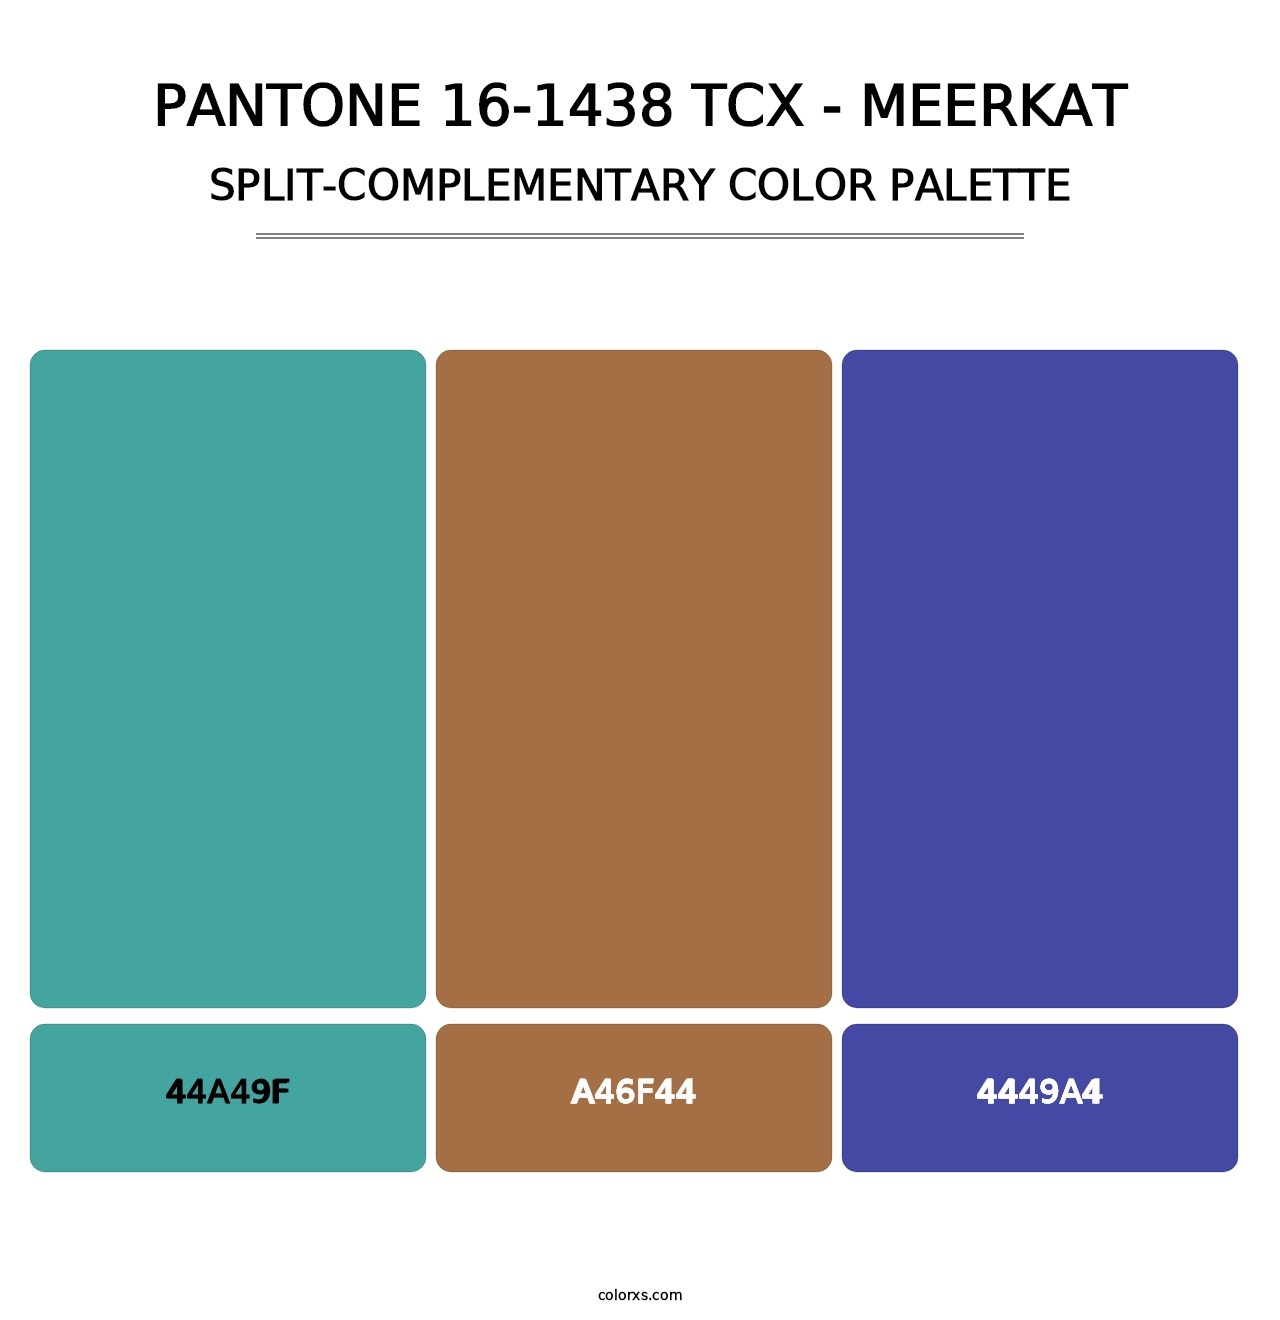 PANTONE 16-1438 TCX - Meerkat - Split-Complementary Color Palette